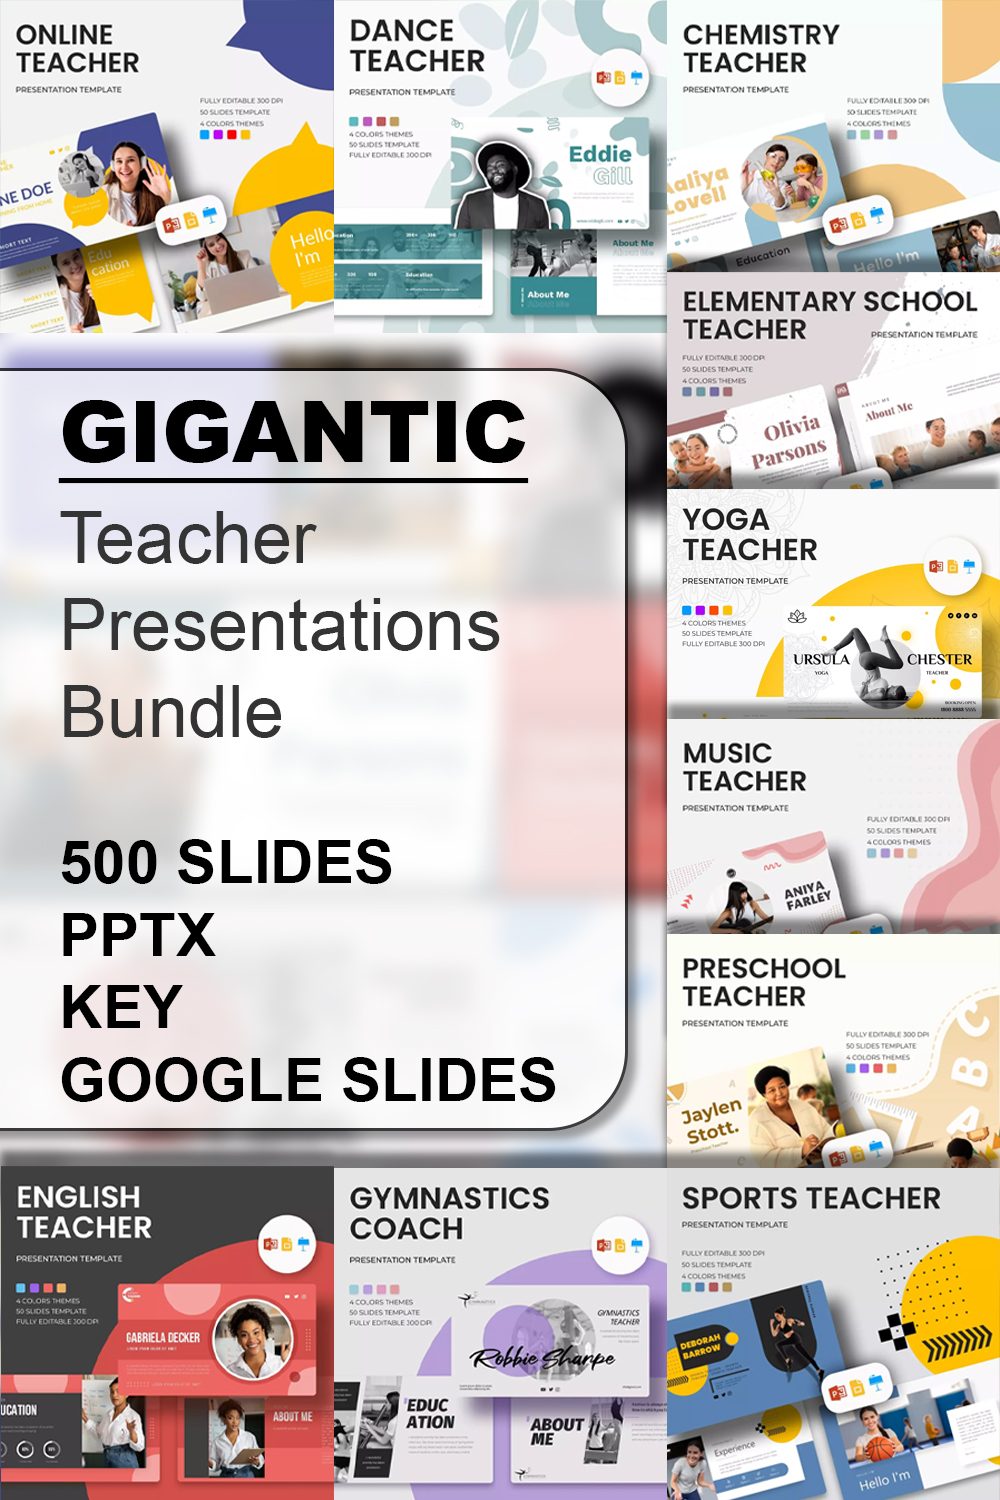 Gigantic Teacher Presentations Bundle 500 Slides PPTX Key Google Slides Pinterest.